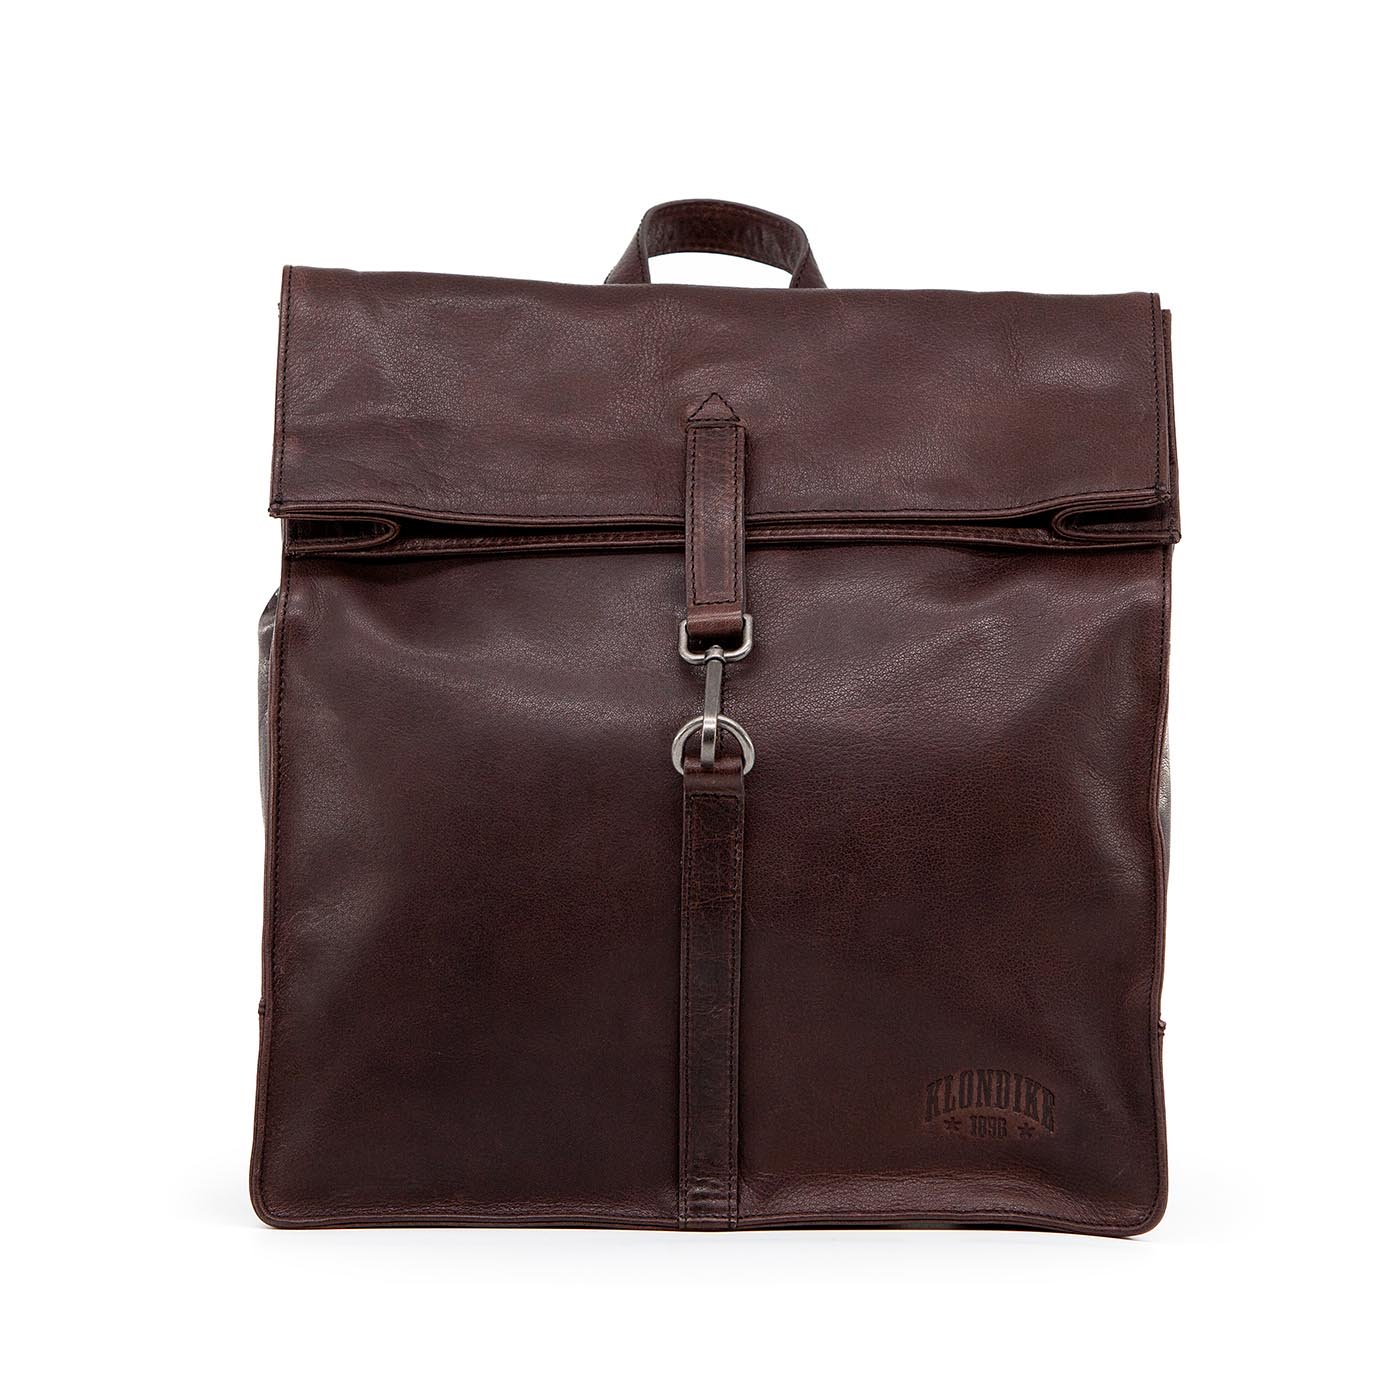 Сумка-рюкзак женский Klondike 1896 KD1070-03 коричневый